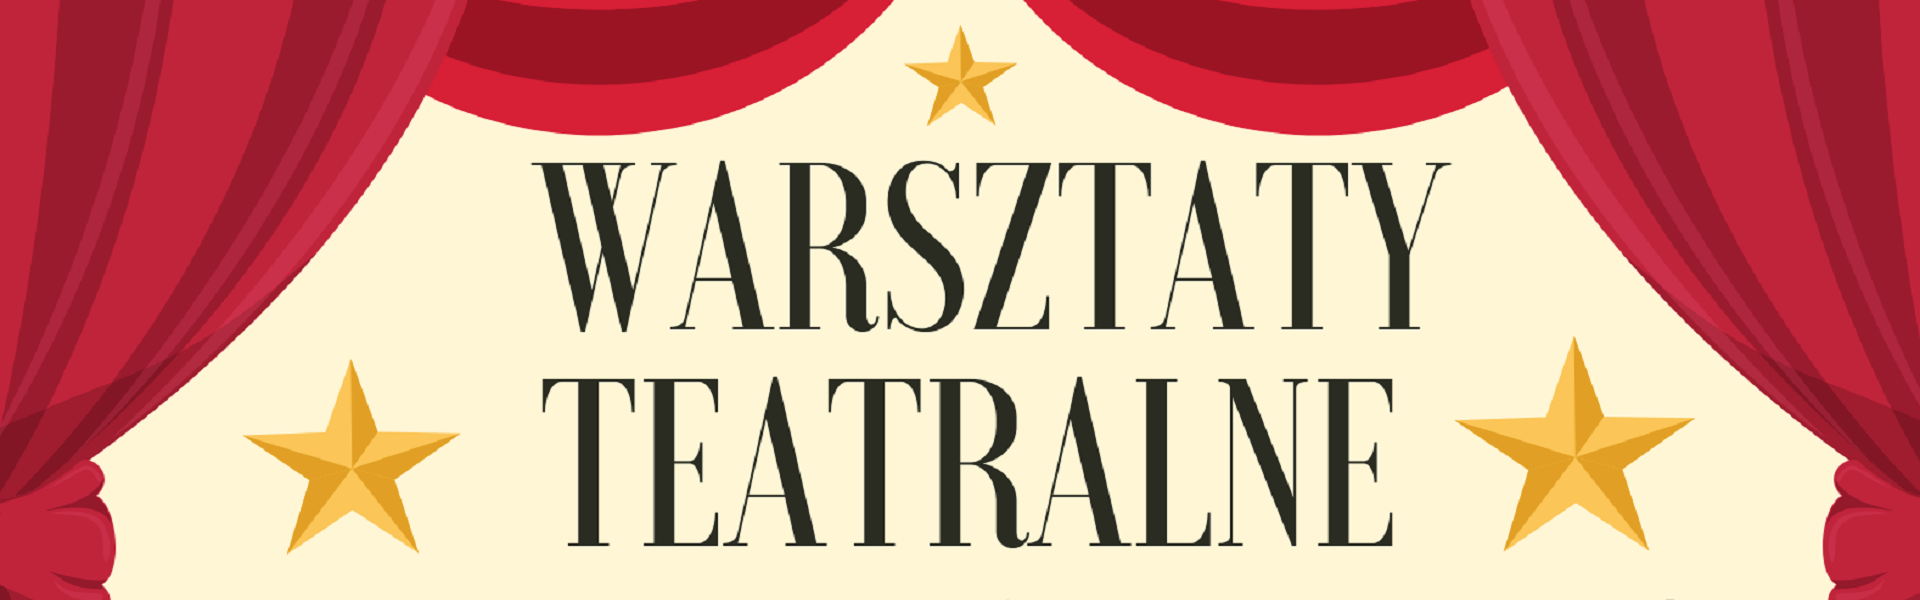 warsztaty_teatralne_banner